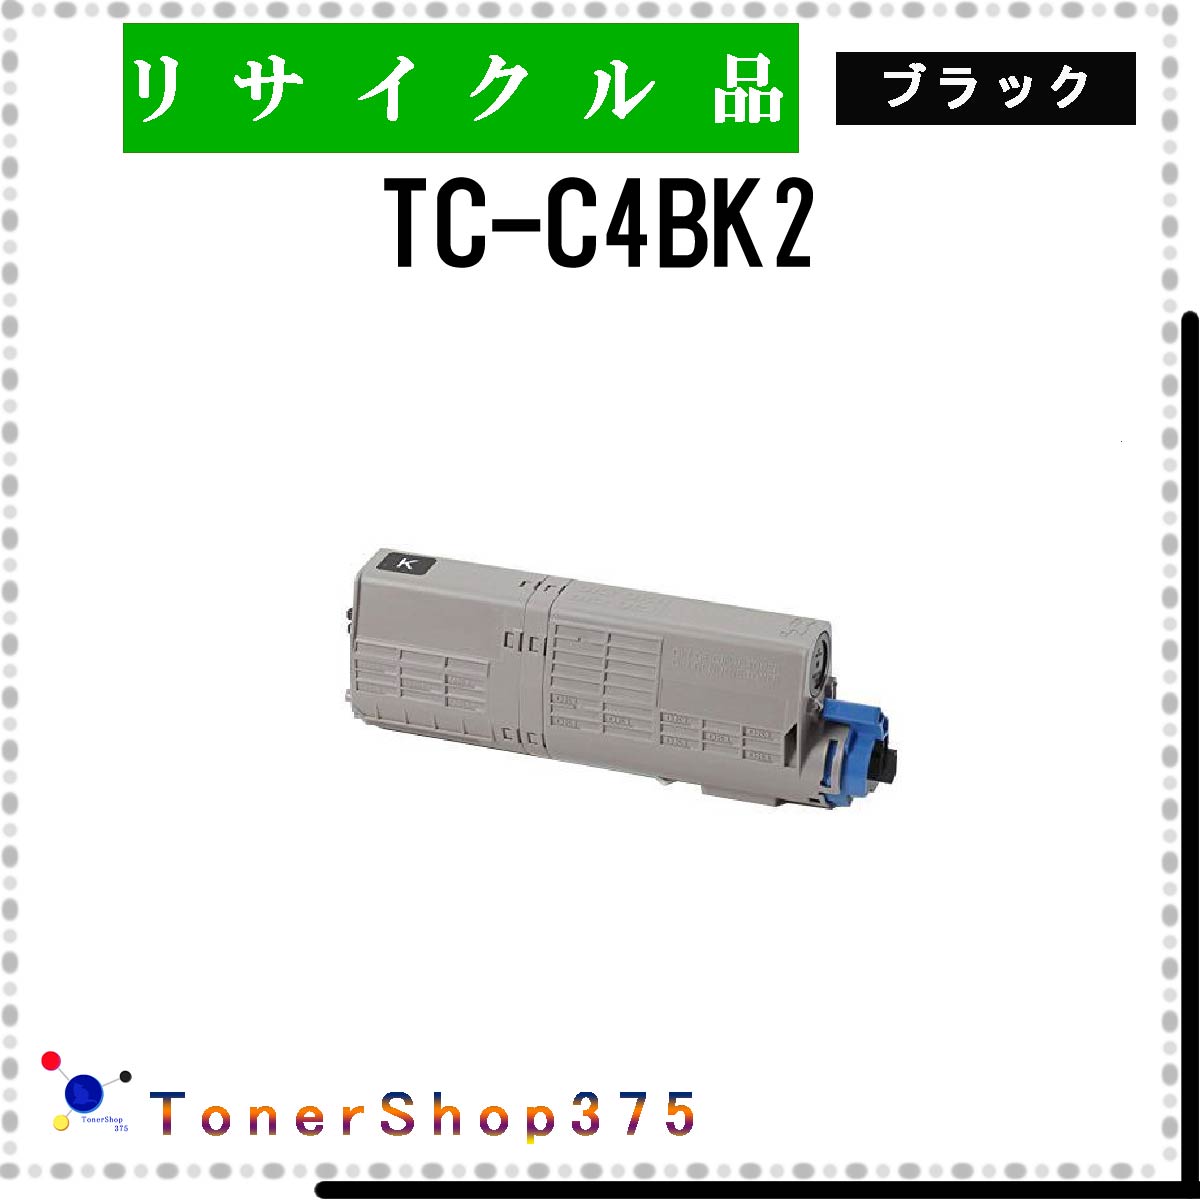 OKI y TC-C4BK2 z ubN TCN gi[ TCNHƉFH蒼 STMCF aĐ 